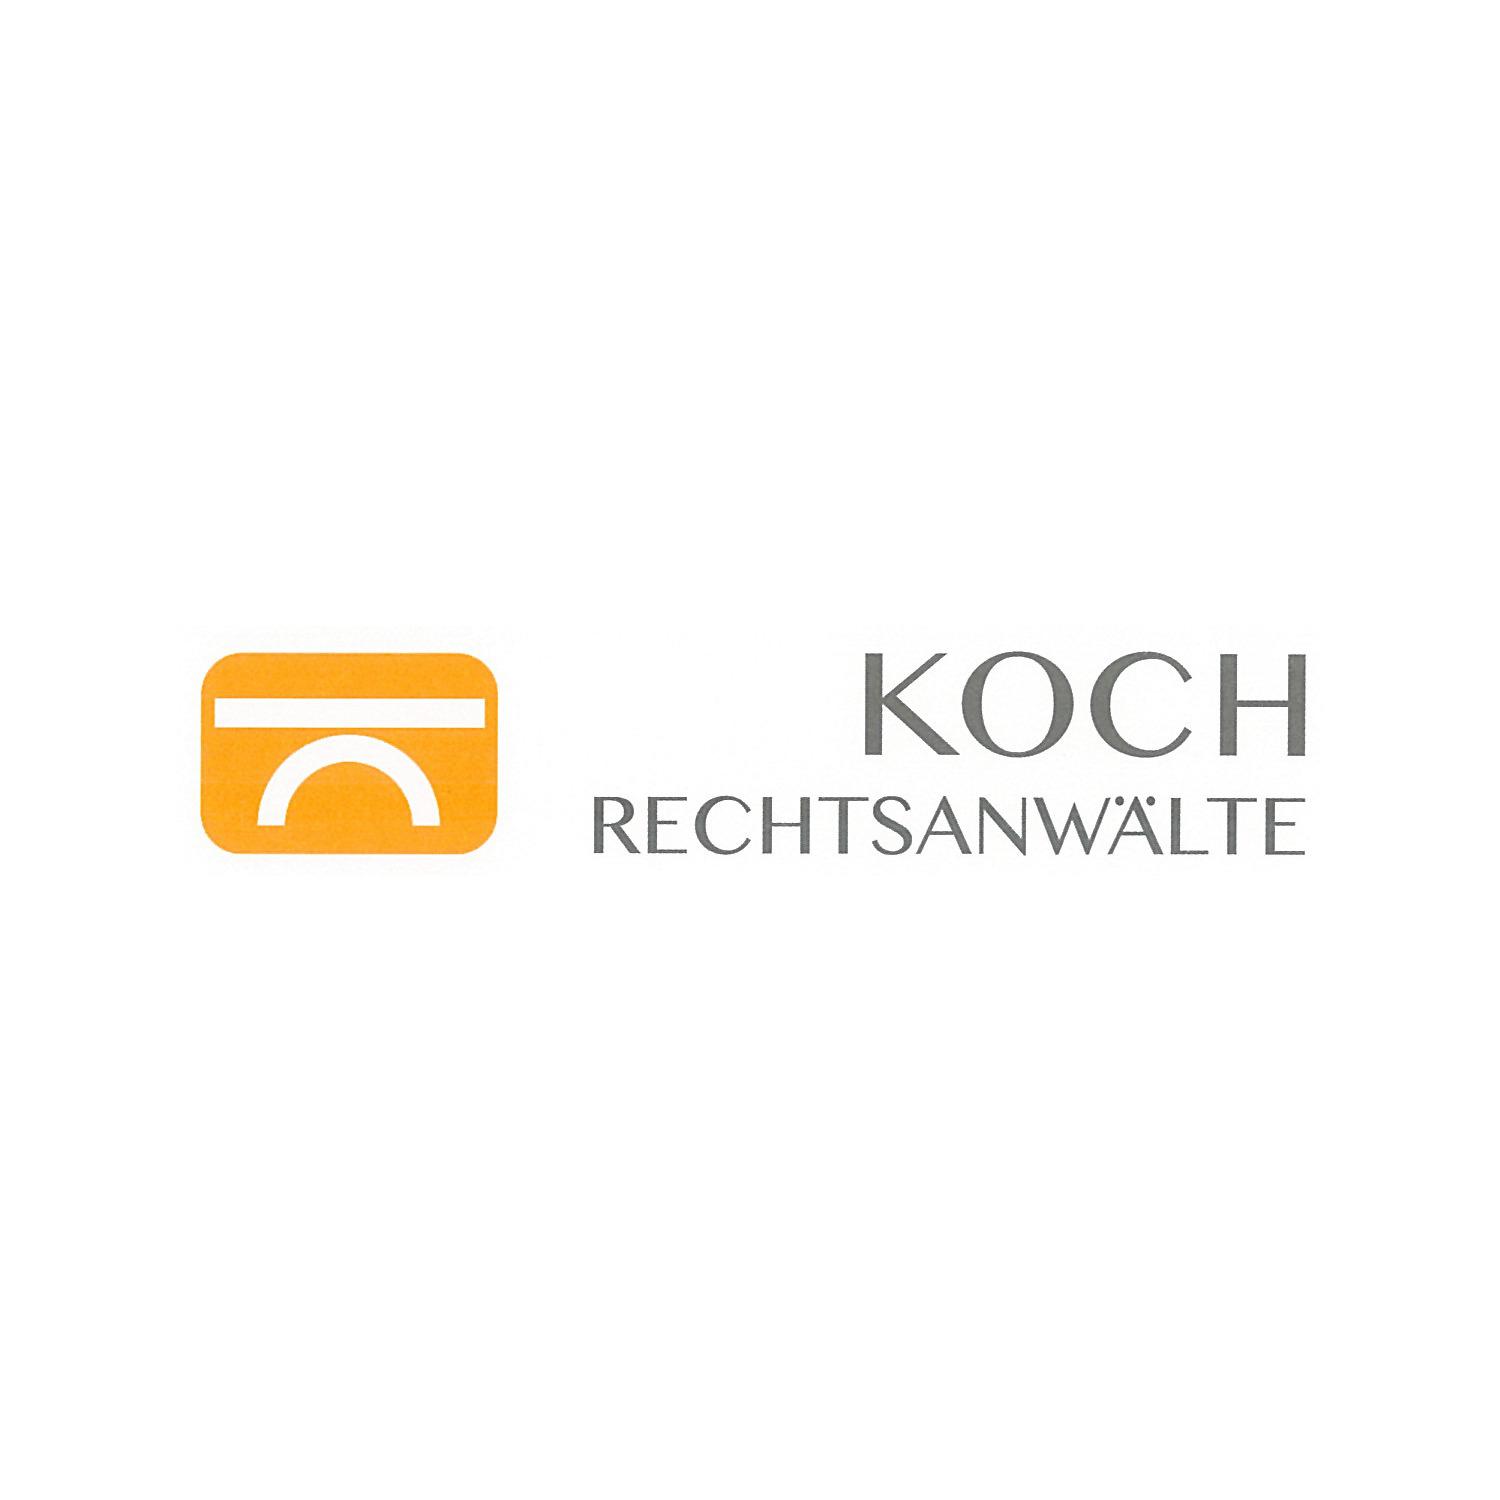 Koch Rechtsanwälte I Düsseldorf in Düsseldorf - Logo